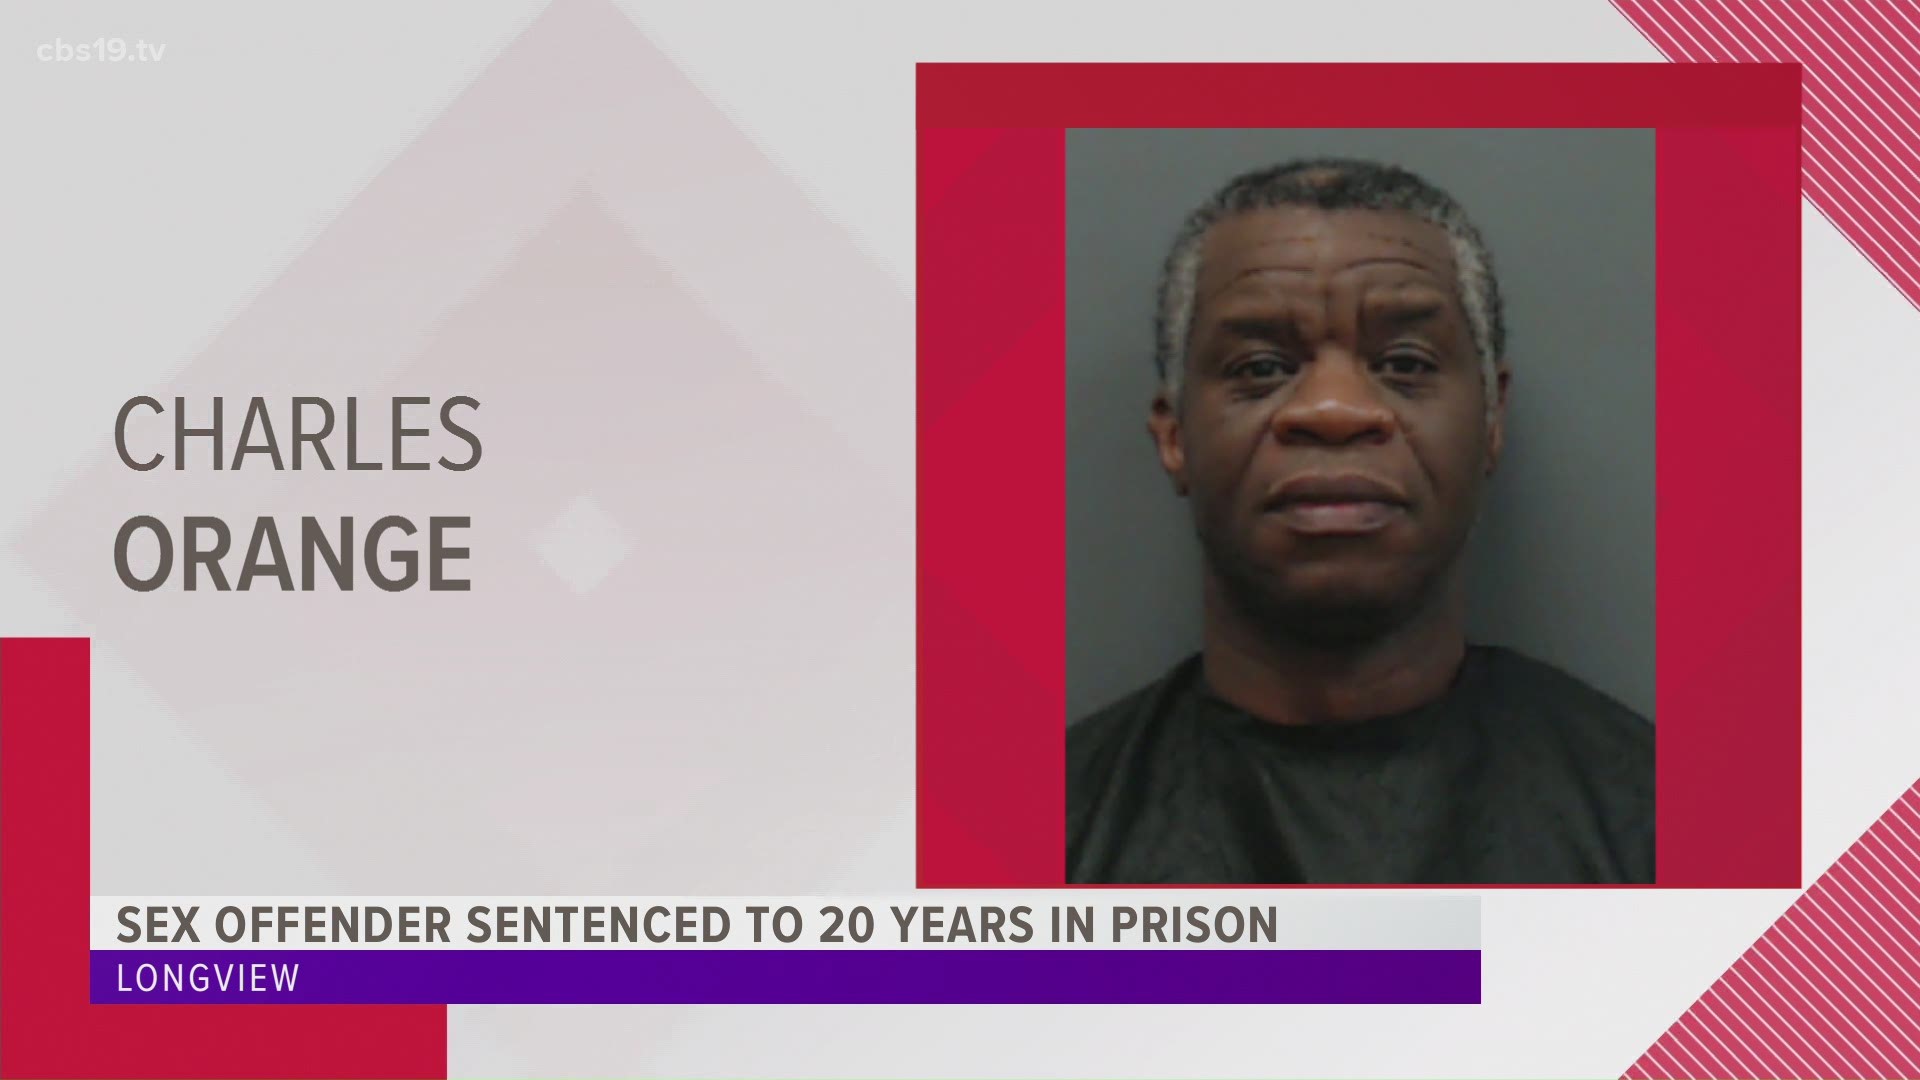 Longview sex offender gets 20 years in prison cbs19